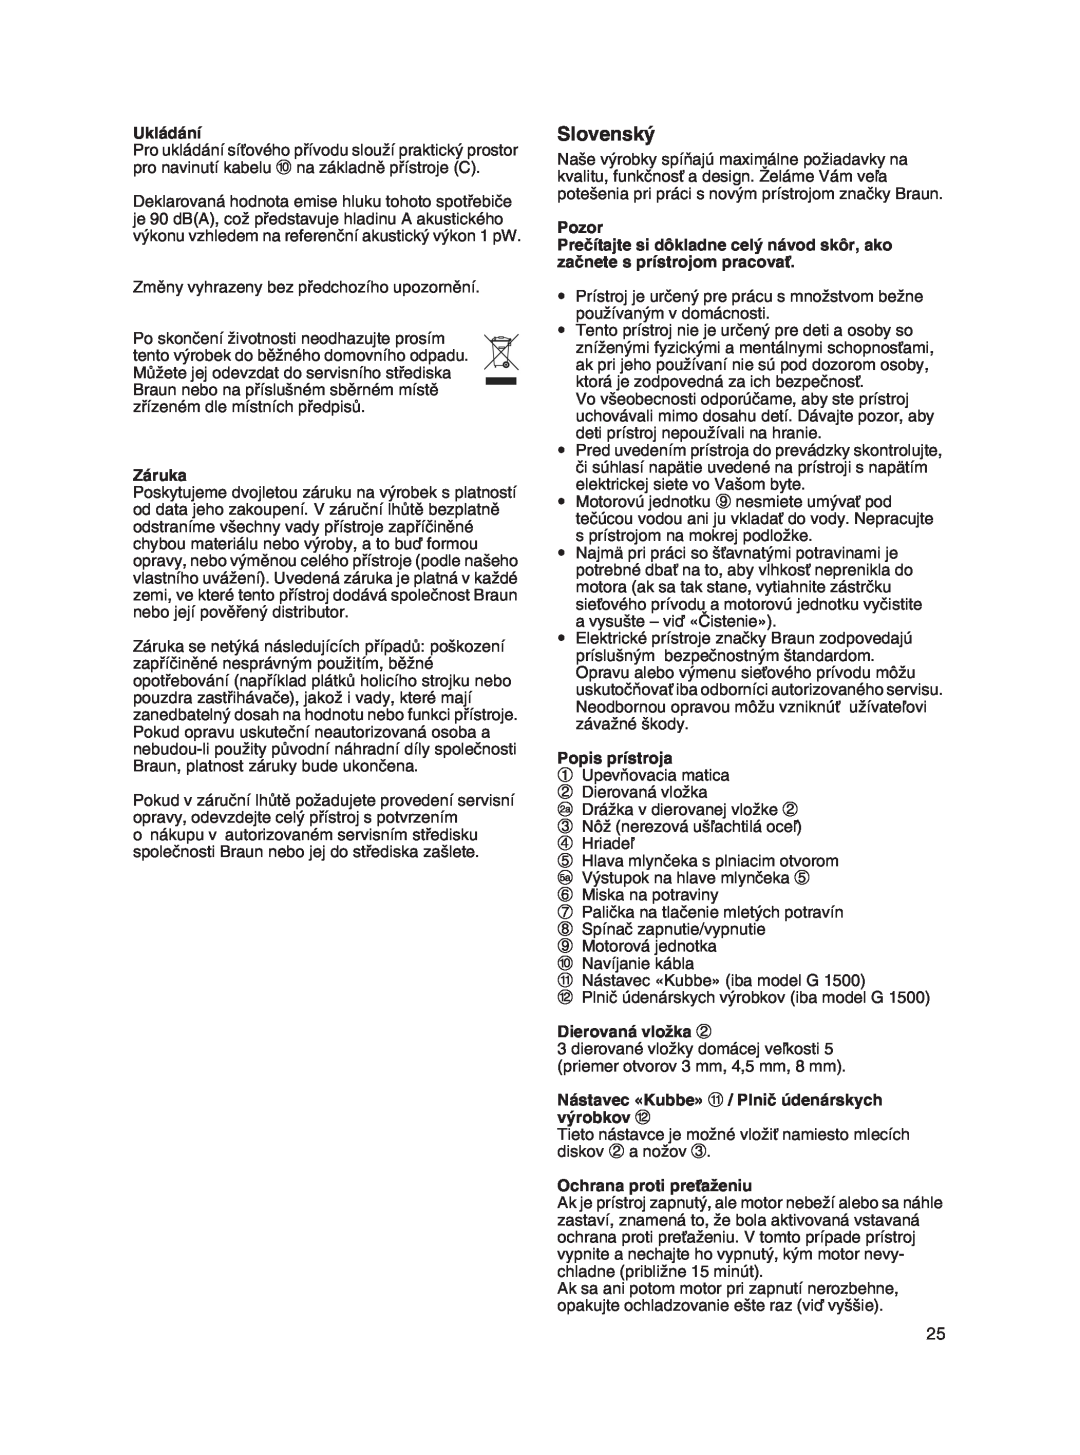 Braun G 1500 manual Slovensk˘, Ukládání, Záruka, Pozor, Popis prístroja, Dierovaná vloÏka, Ochrana proti preÈaÏeniu 